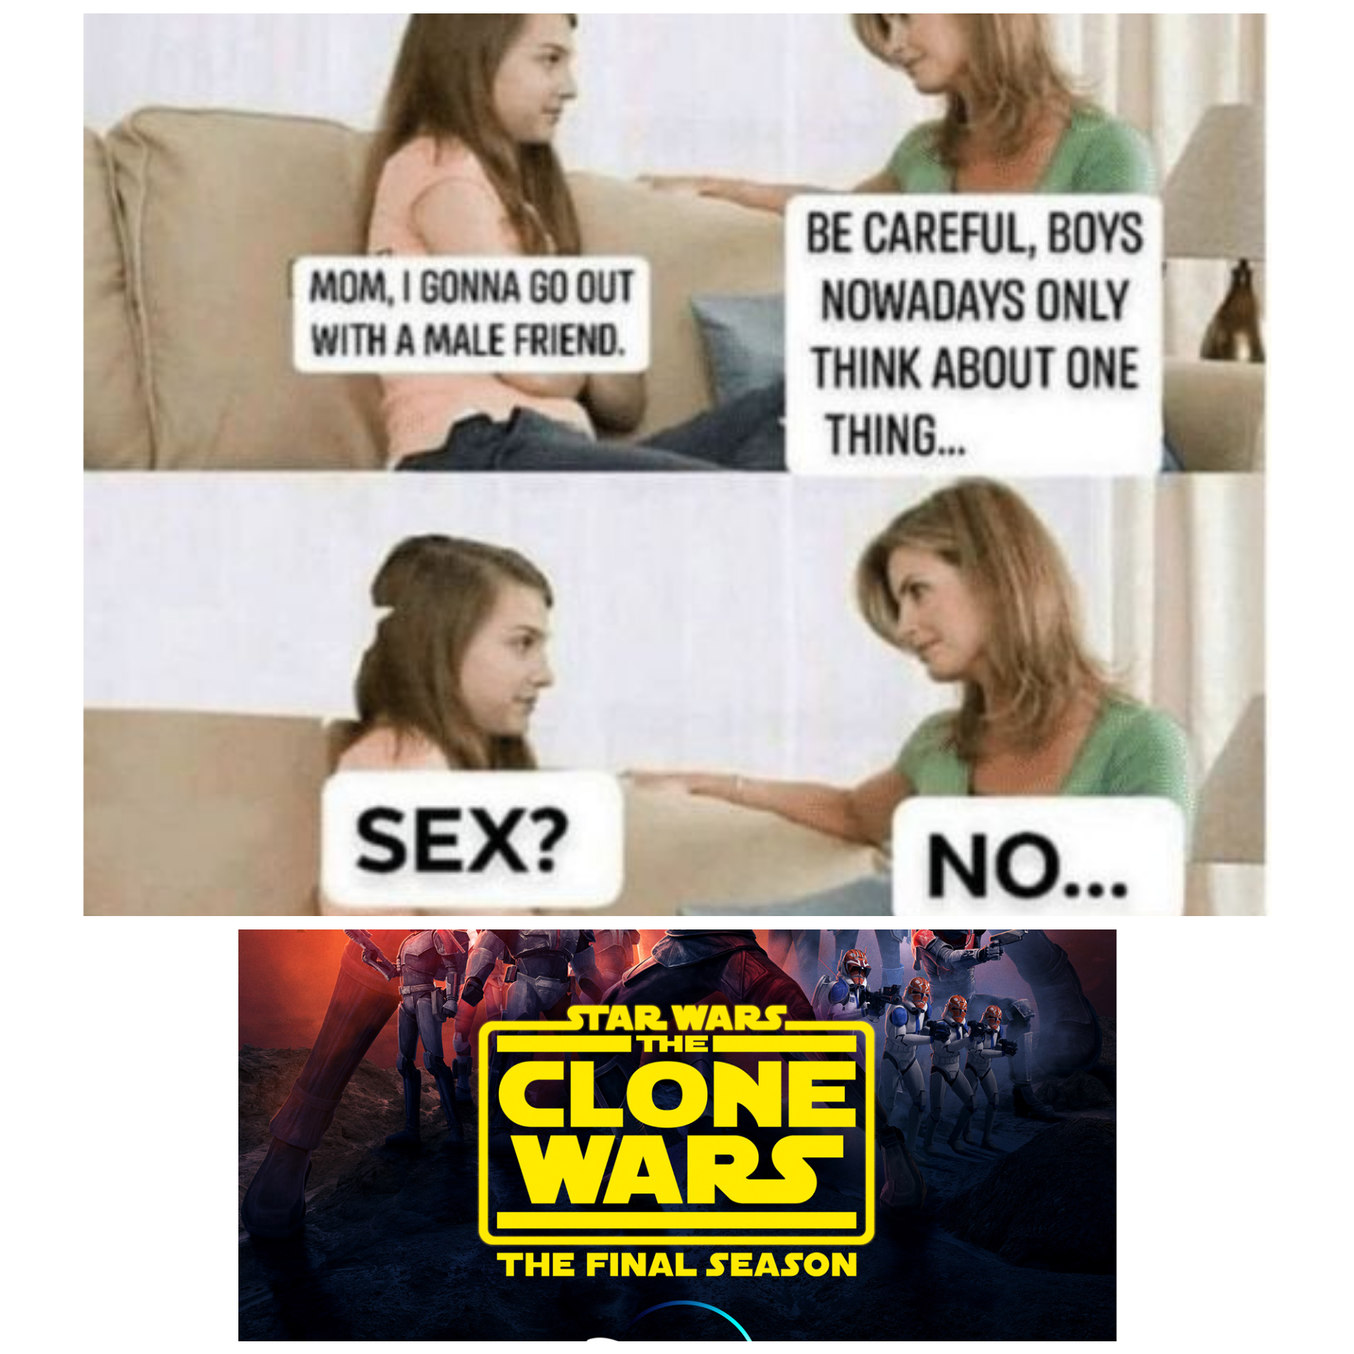 *star wars theme starts* - meme